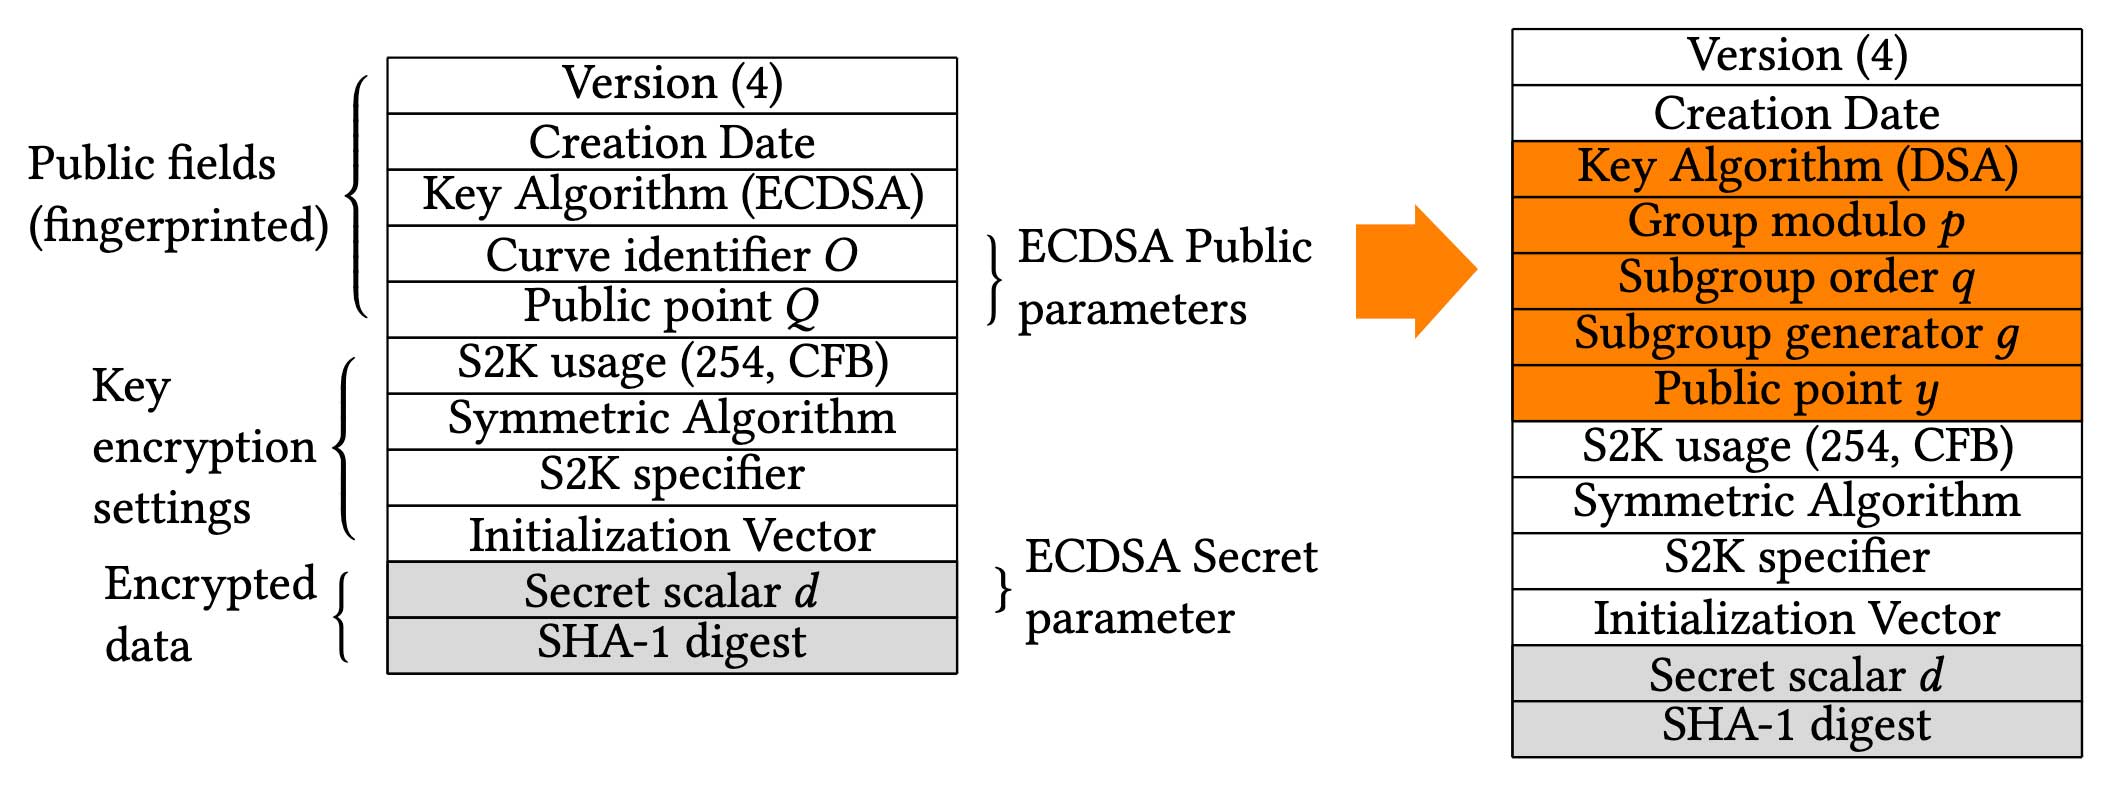 Schematics of overwritten ECDSA key